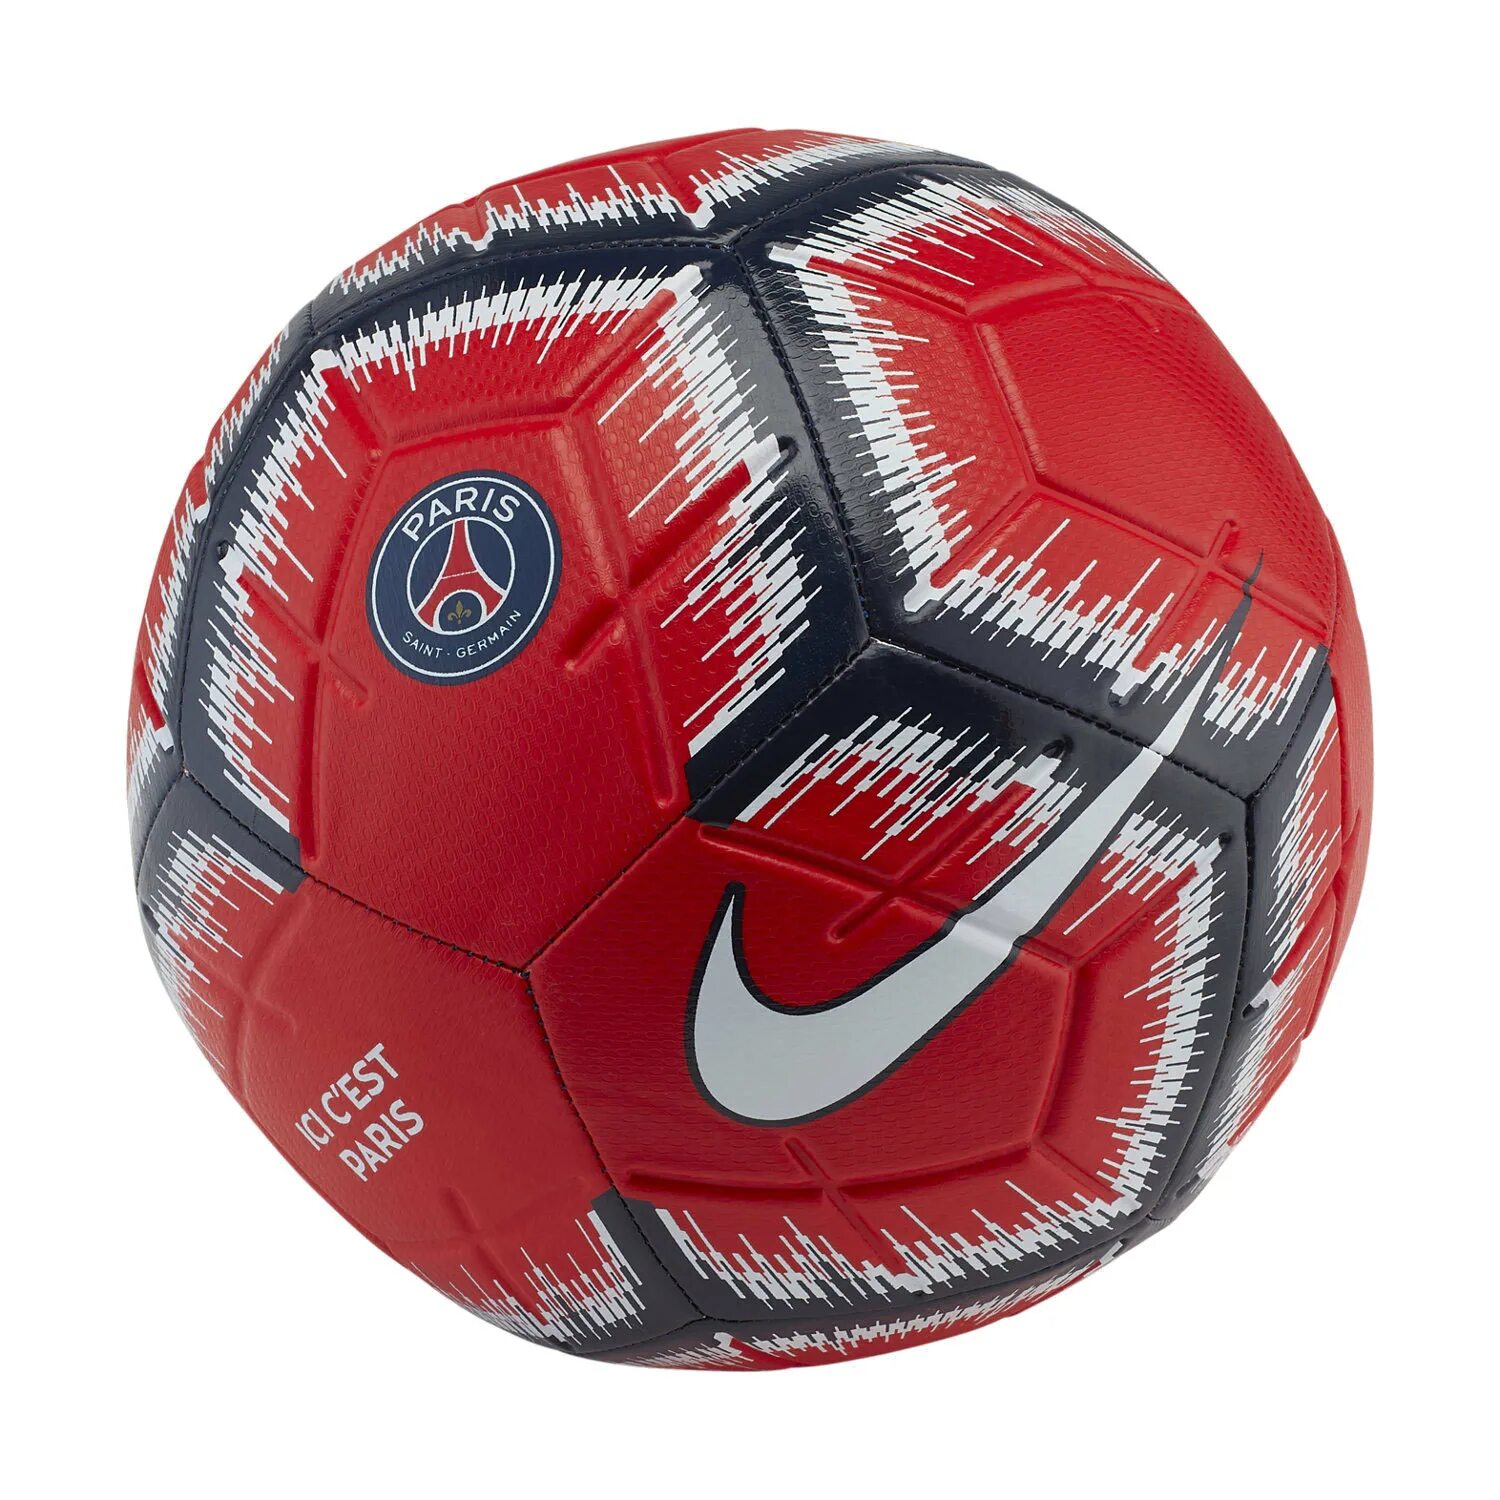 Футбольный мяч Nike PSG. Мяч футбольный Nike Paris Saint-Germain. Футбольный мяч найк ПСЖ. Мяч Nike 2022. Легендарные мячи